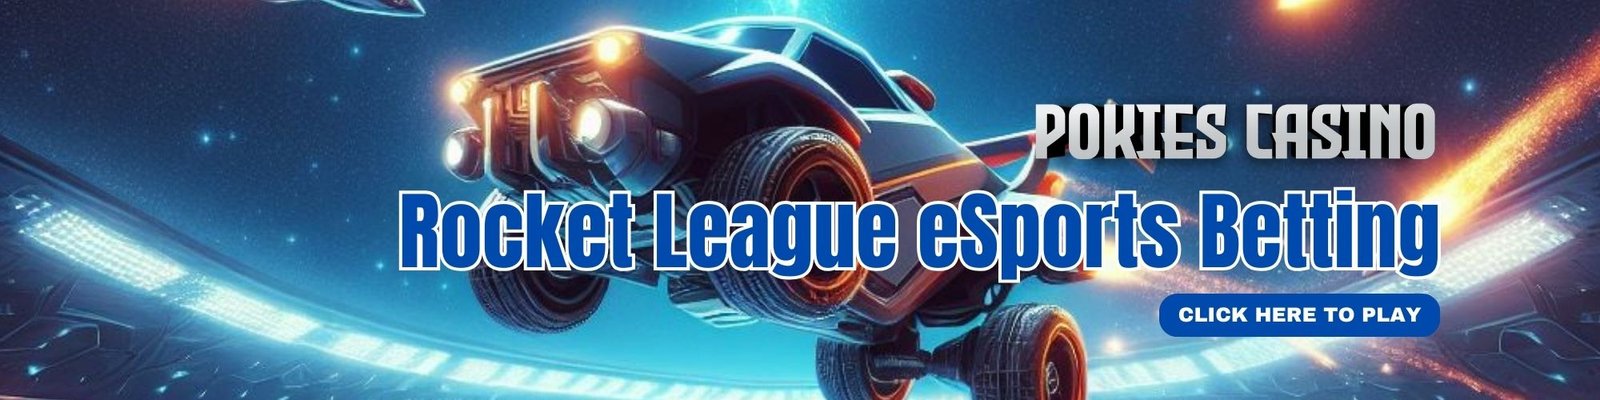 Rocket League Esports Betting